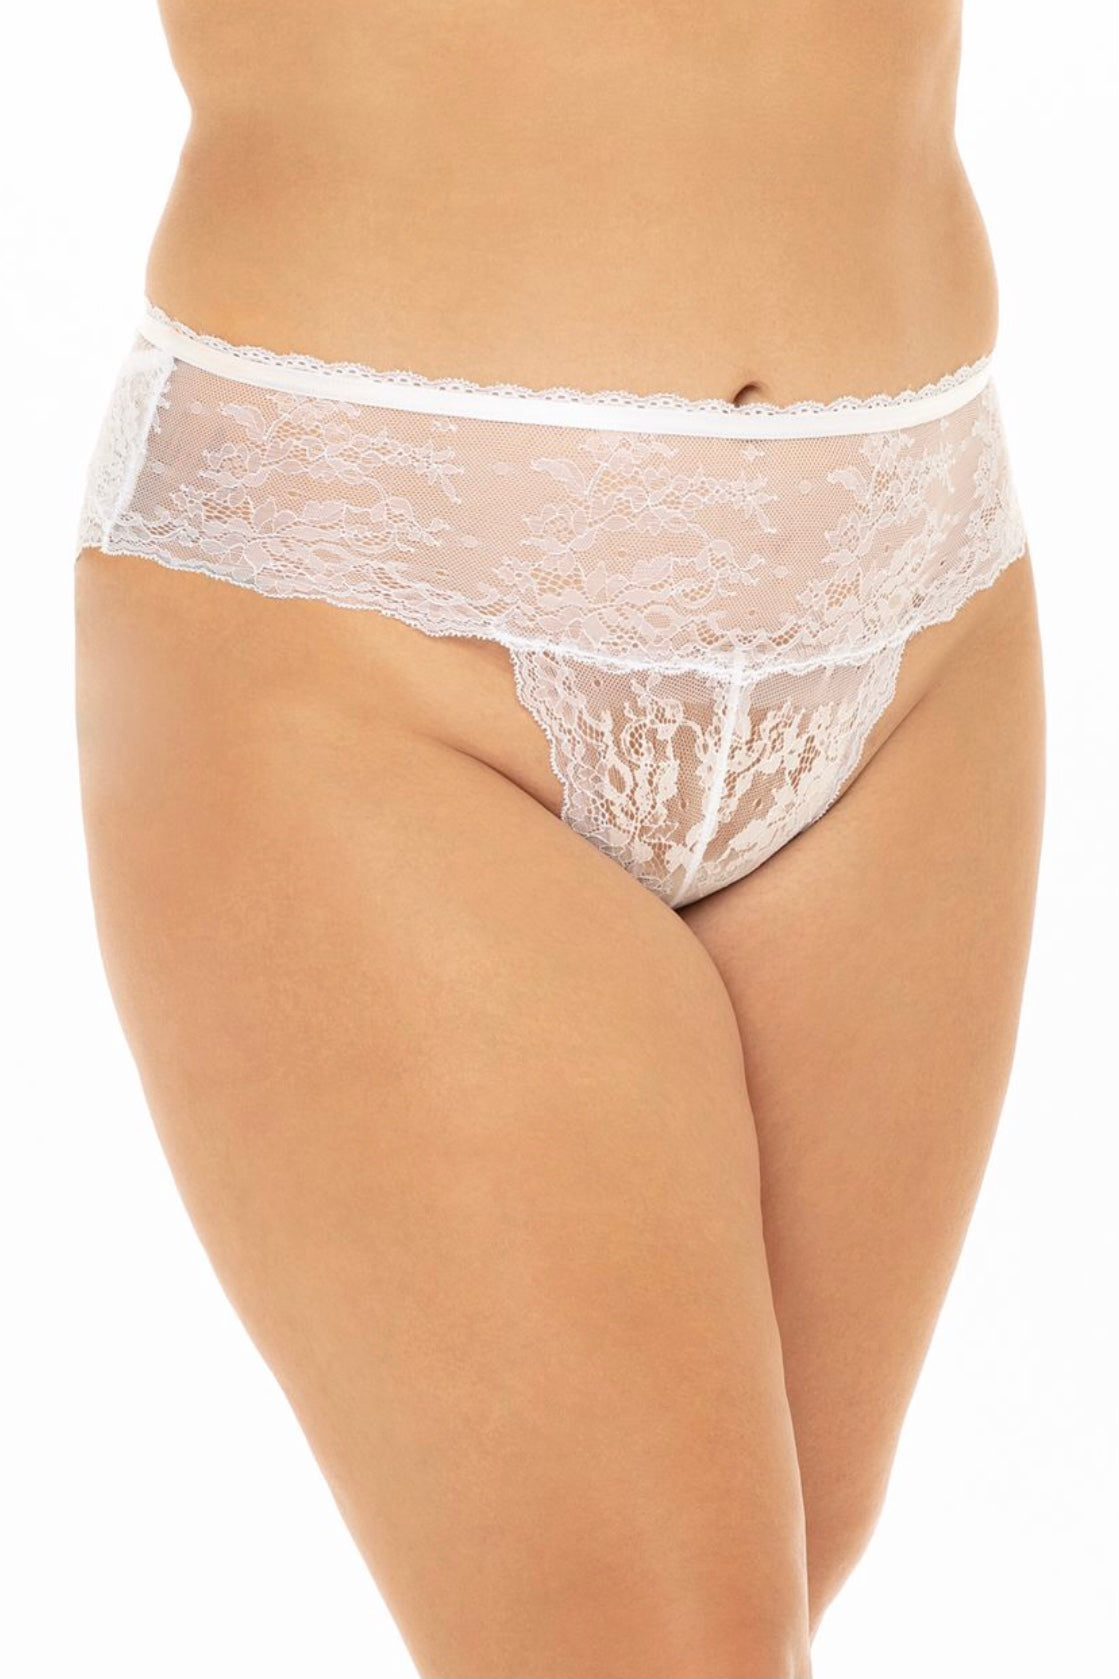 Stretch lace panty white - CurvynBeautiful 